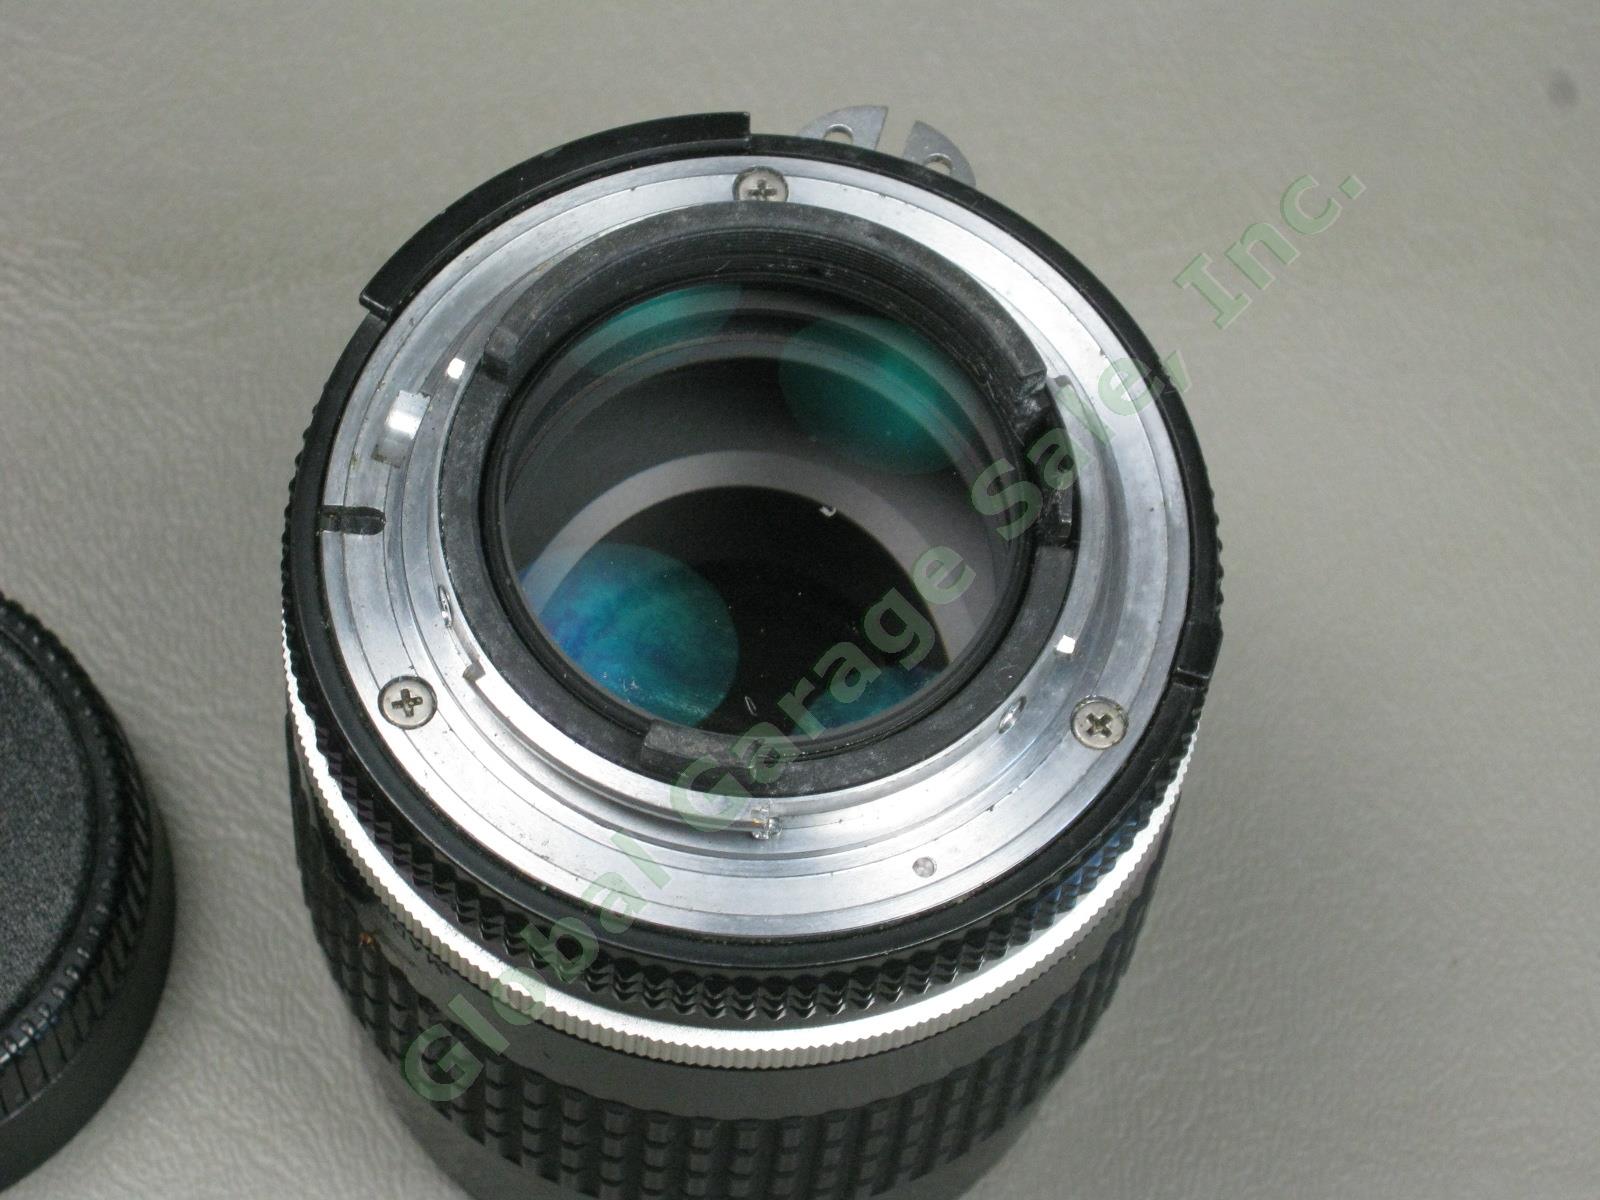 Nikon Nikkor 105mm 1:2.5 f/2.5 Telephoto Camera Lens No Reserve Price! 4